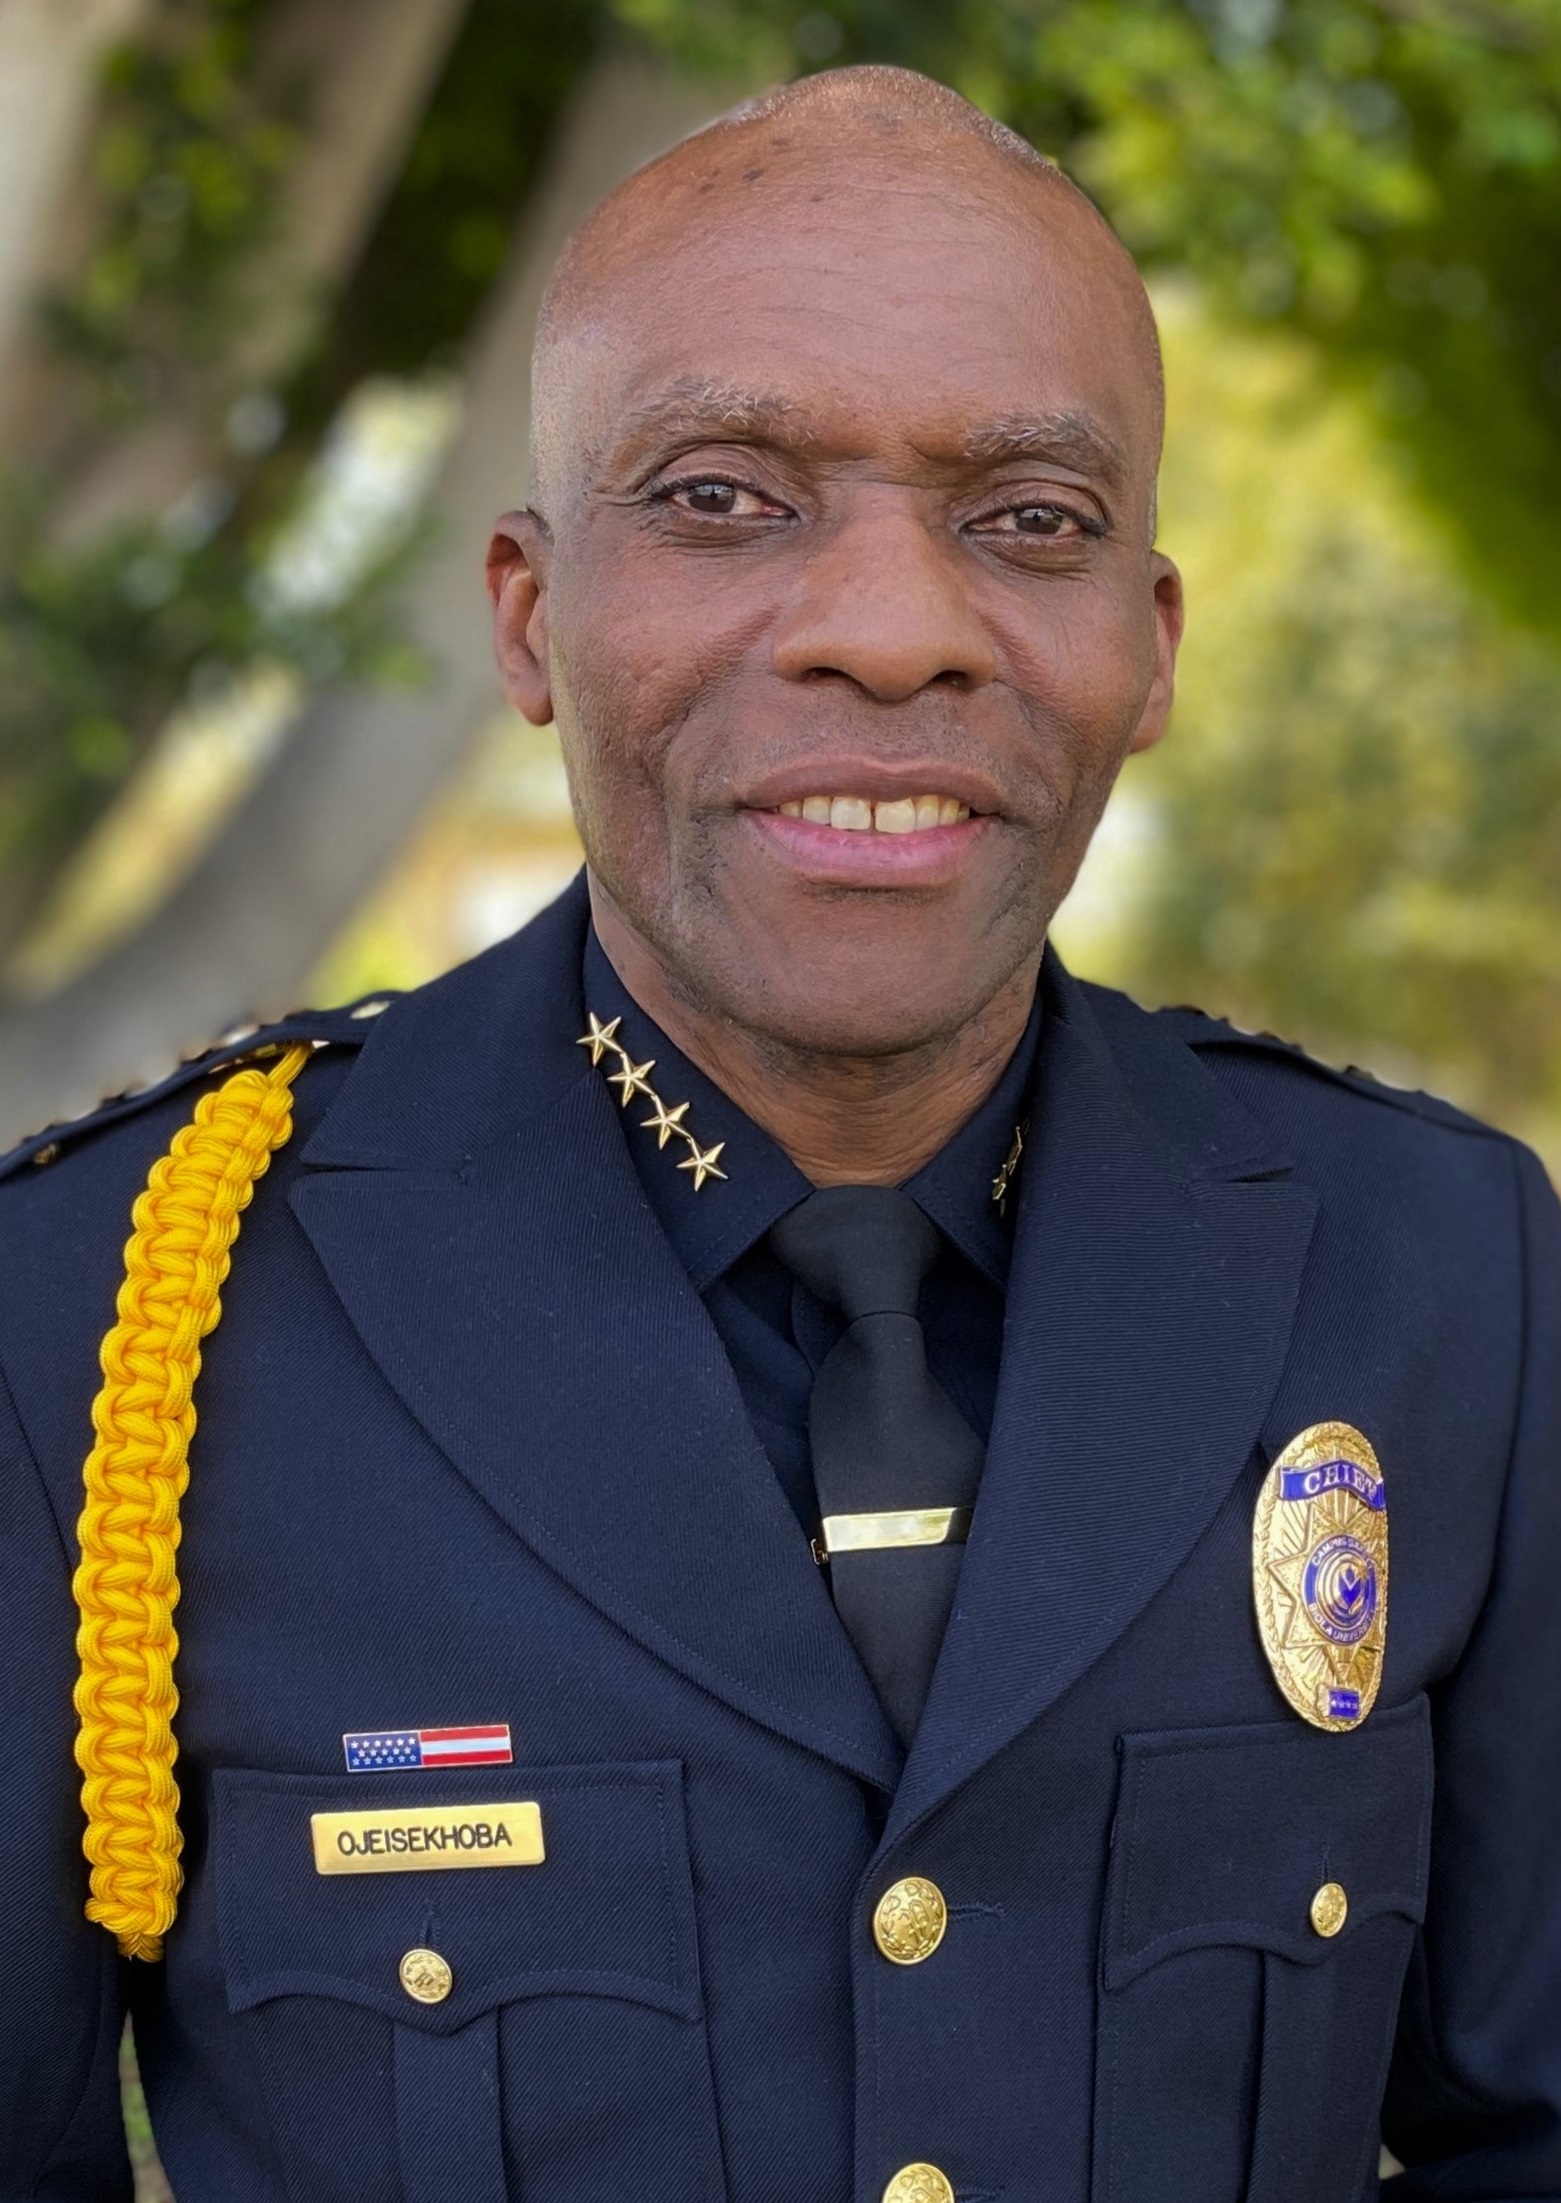 John Ojeisekhoba, a bald Black man wearing a police uniform.